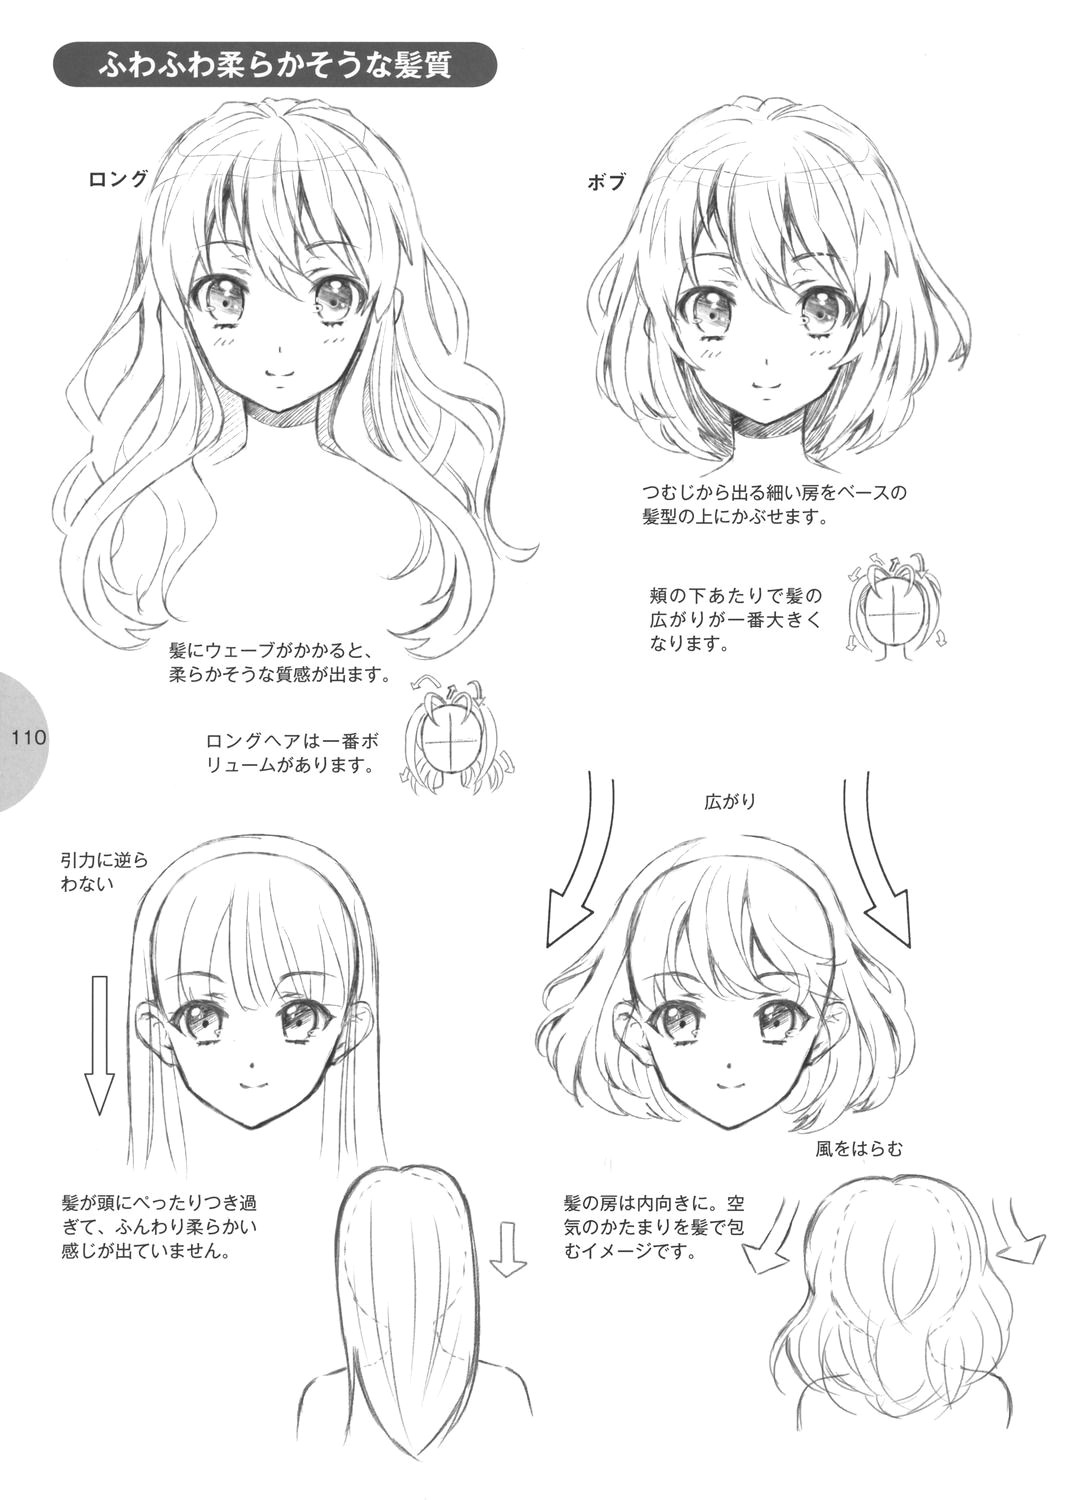 How to Draw Simple Anime Tutorial Hair Manga Hair How to Draw Hair Anime Hair